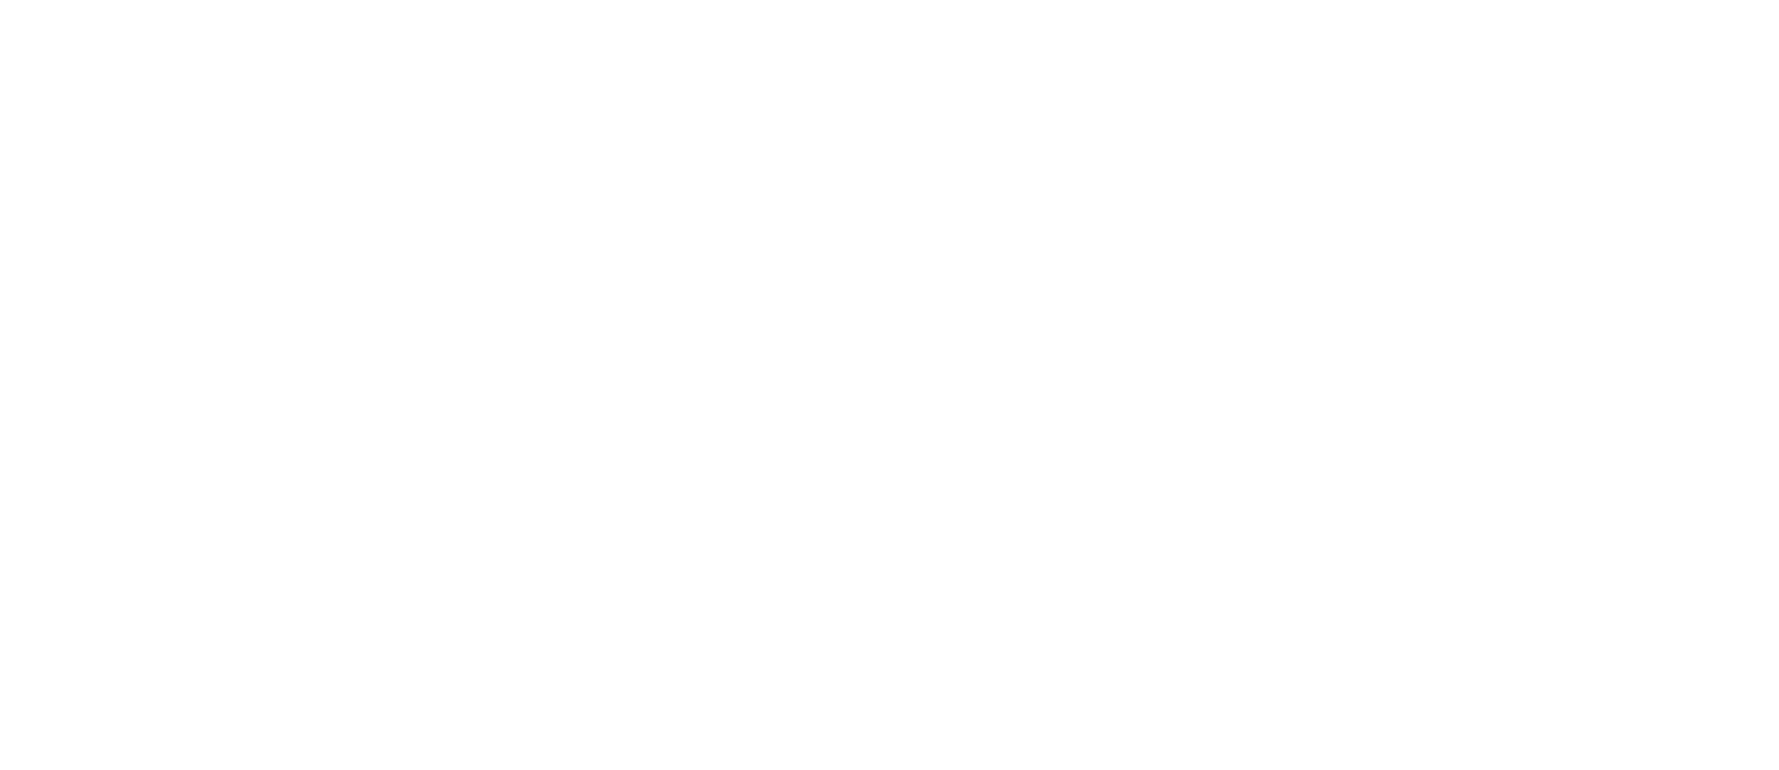 Vow Nutrition Logo